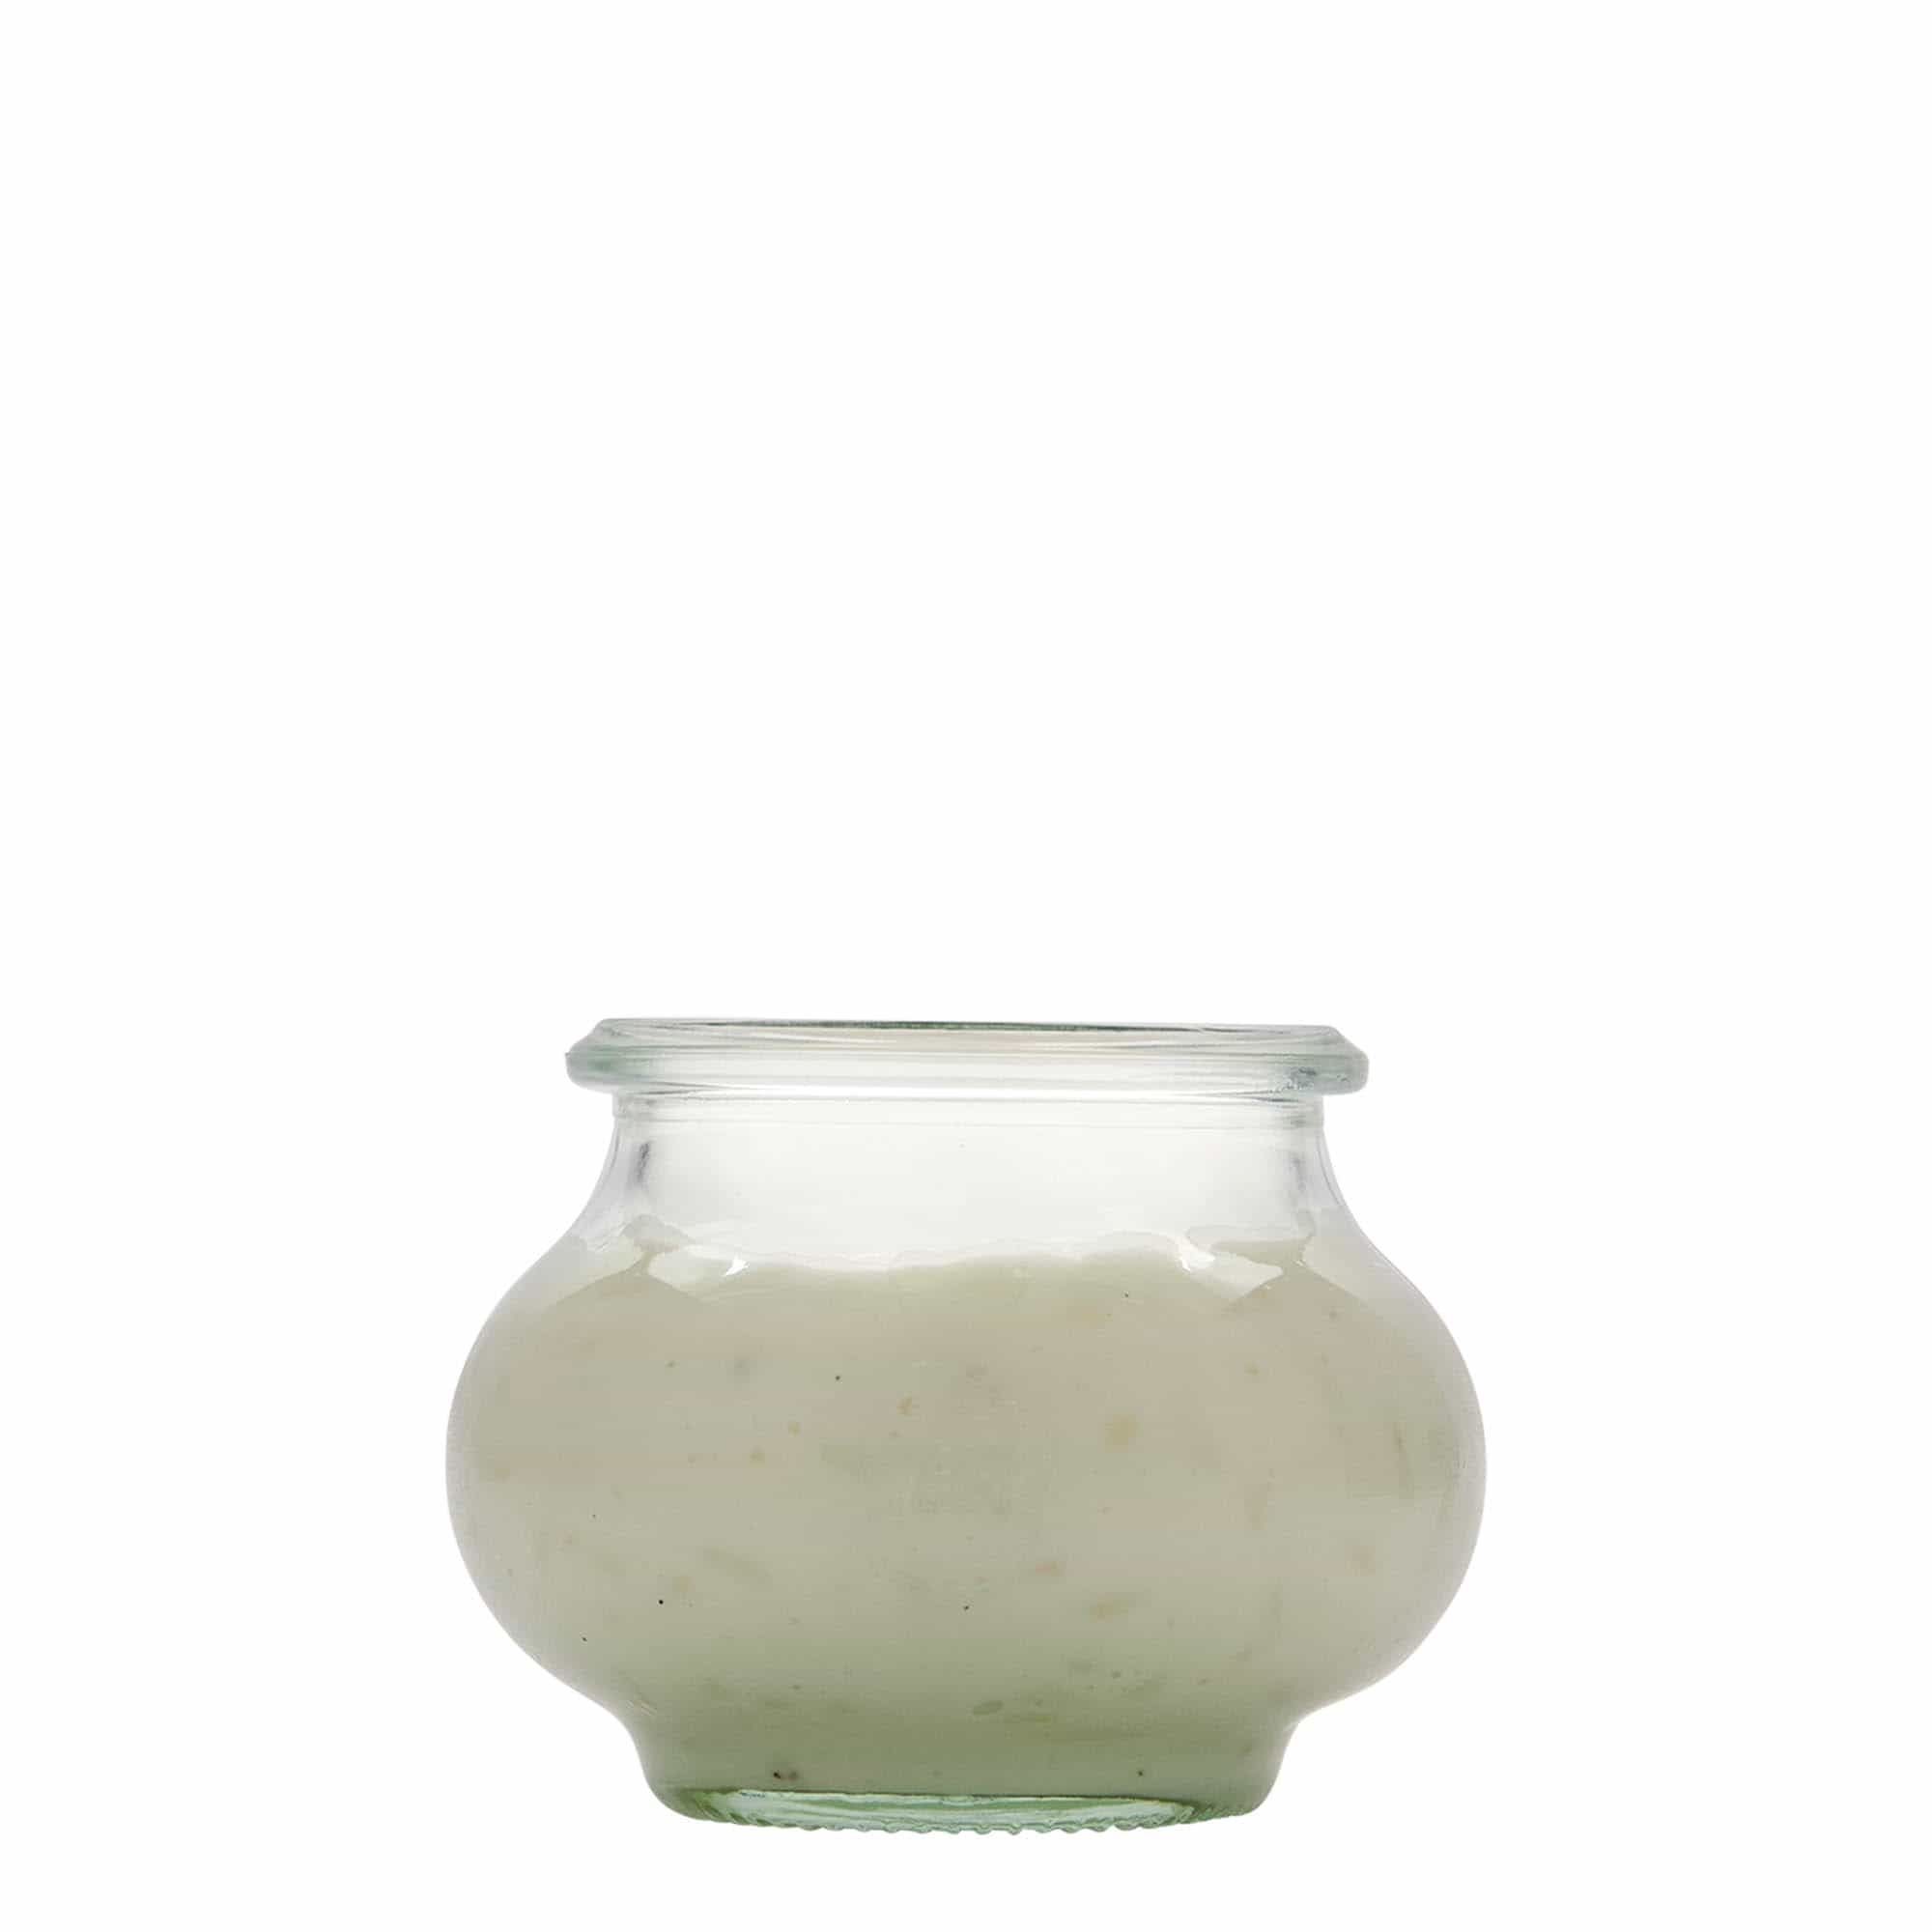 220 ml WECK decorative jar, closure: round rim